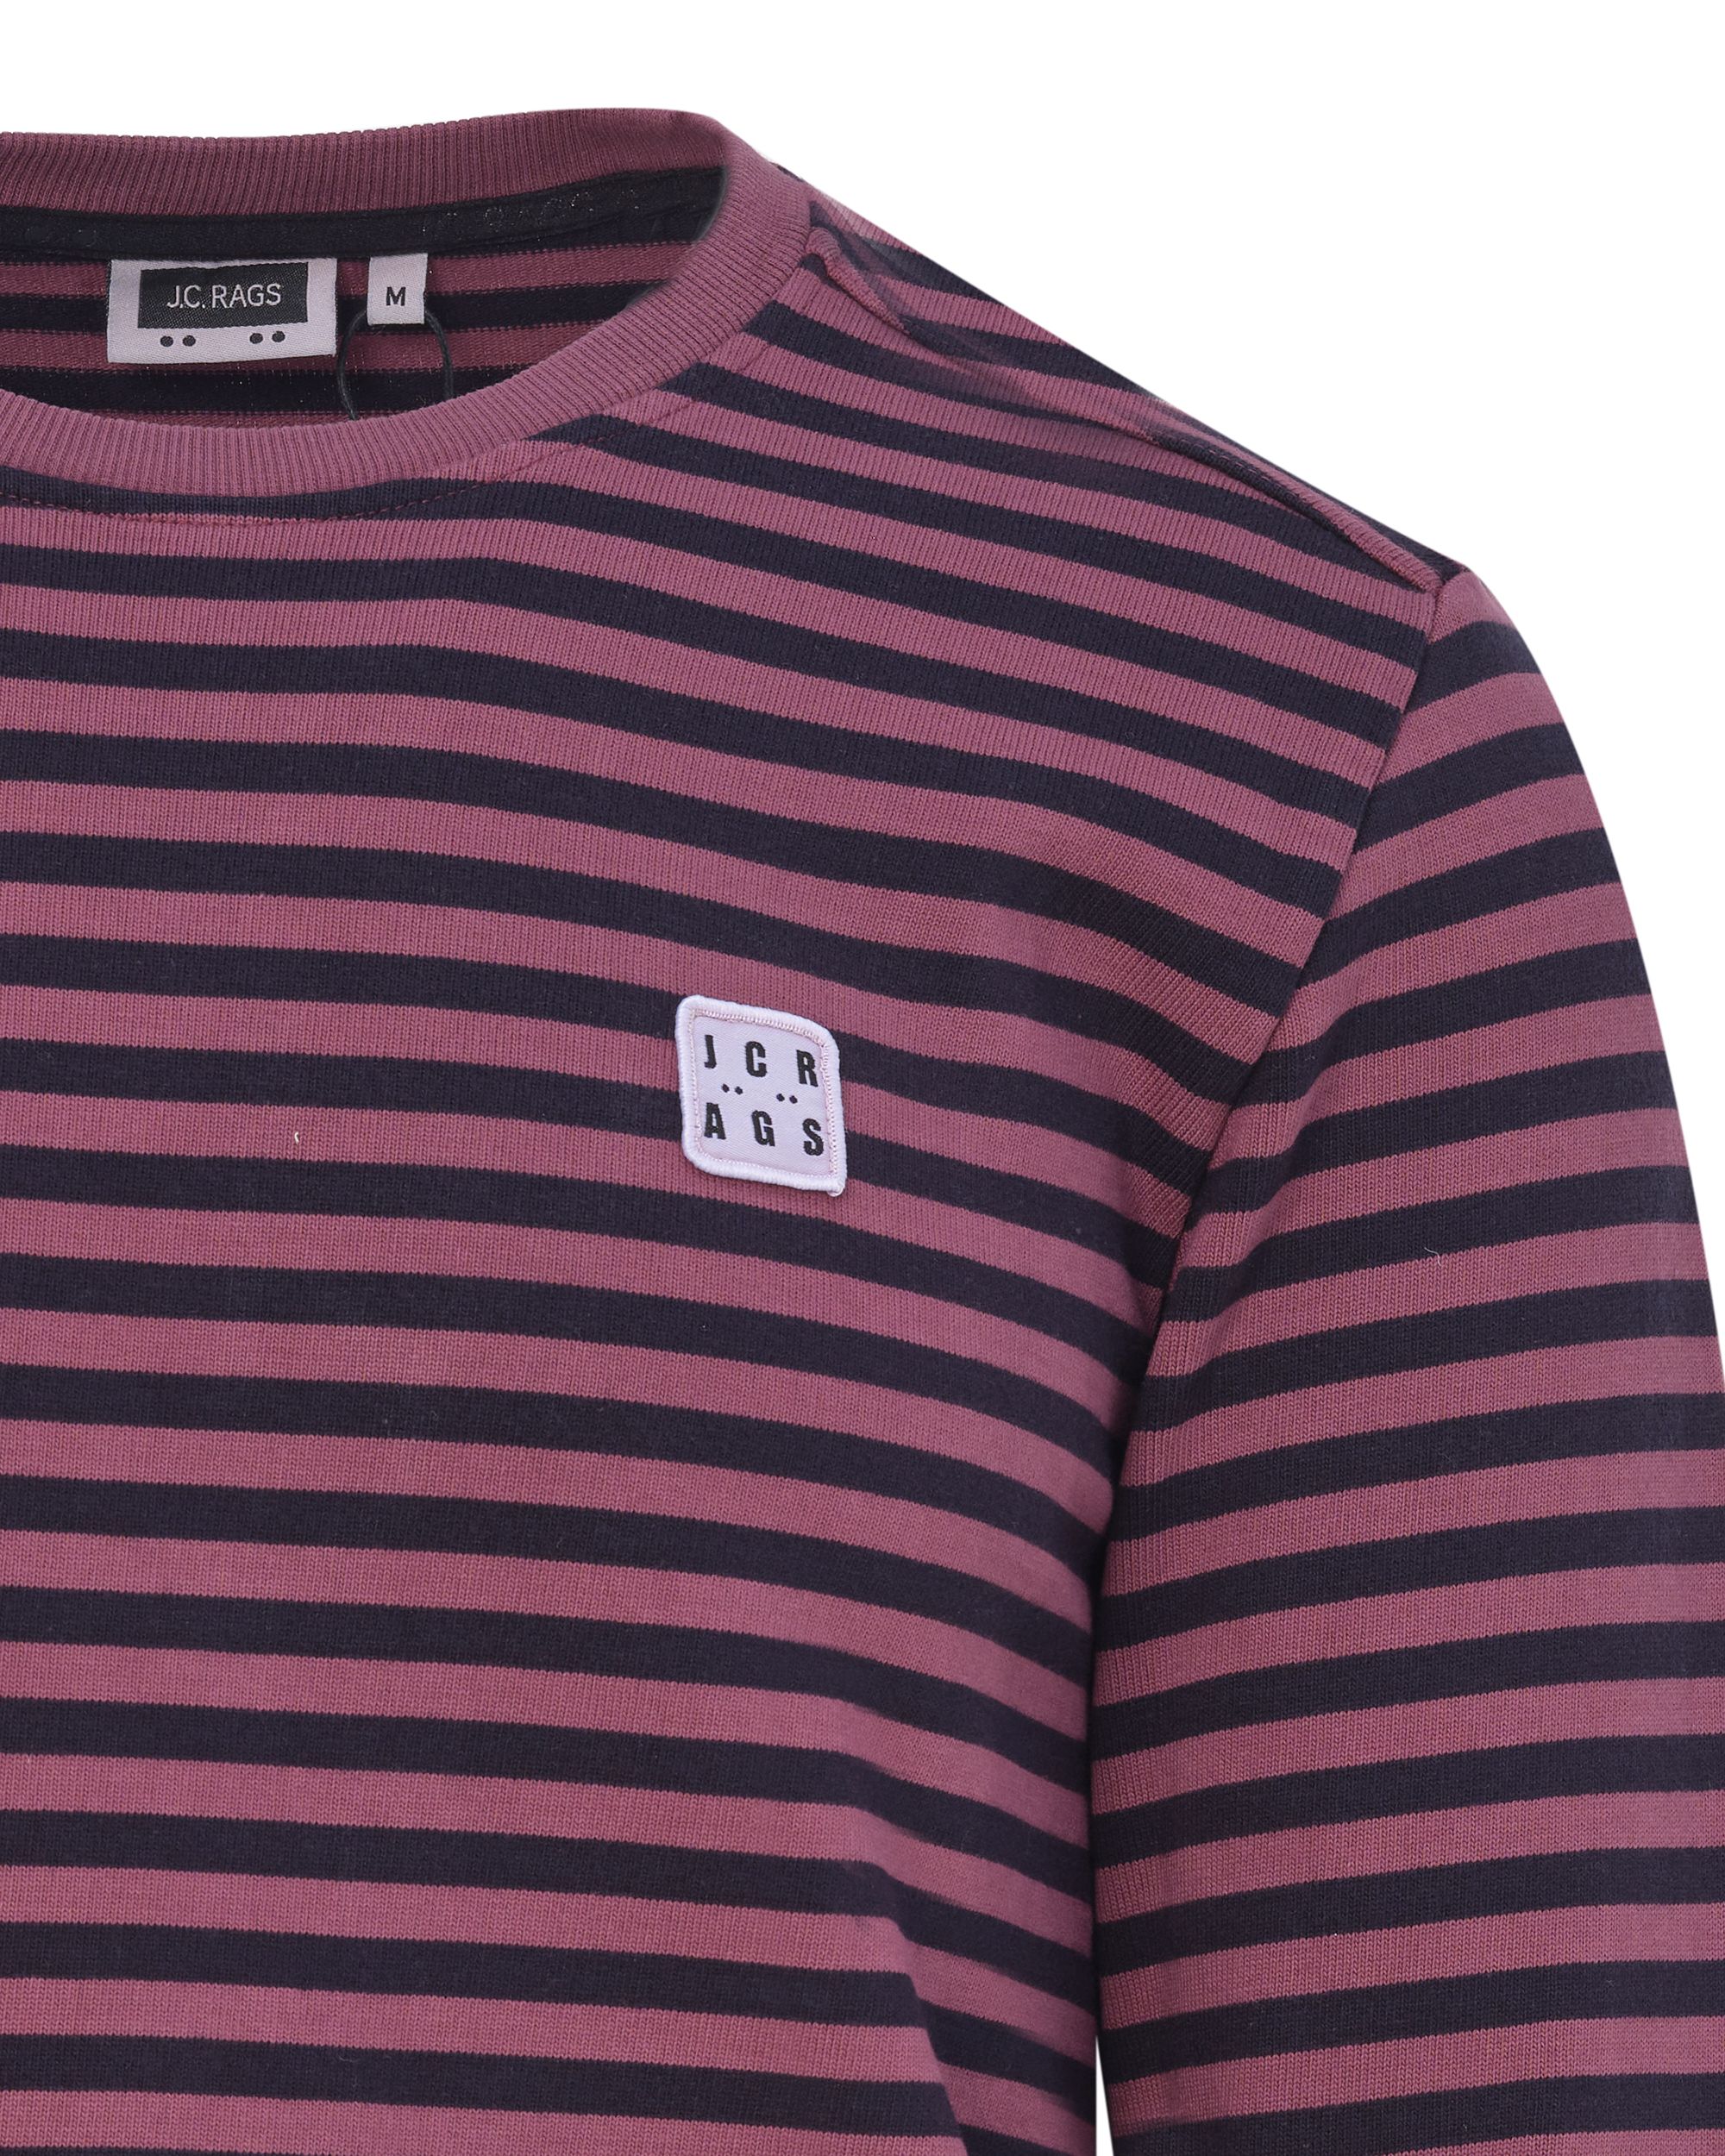 J.C. RAGS T shirt LM Berry stripe 084534-004-L